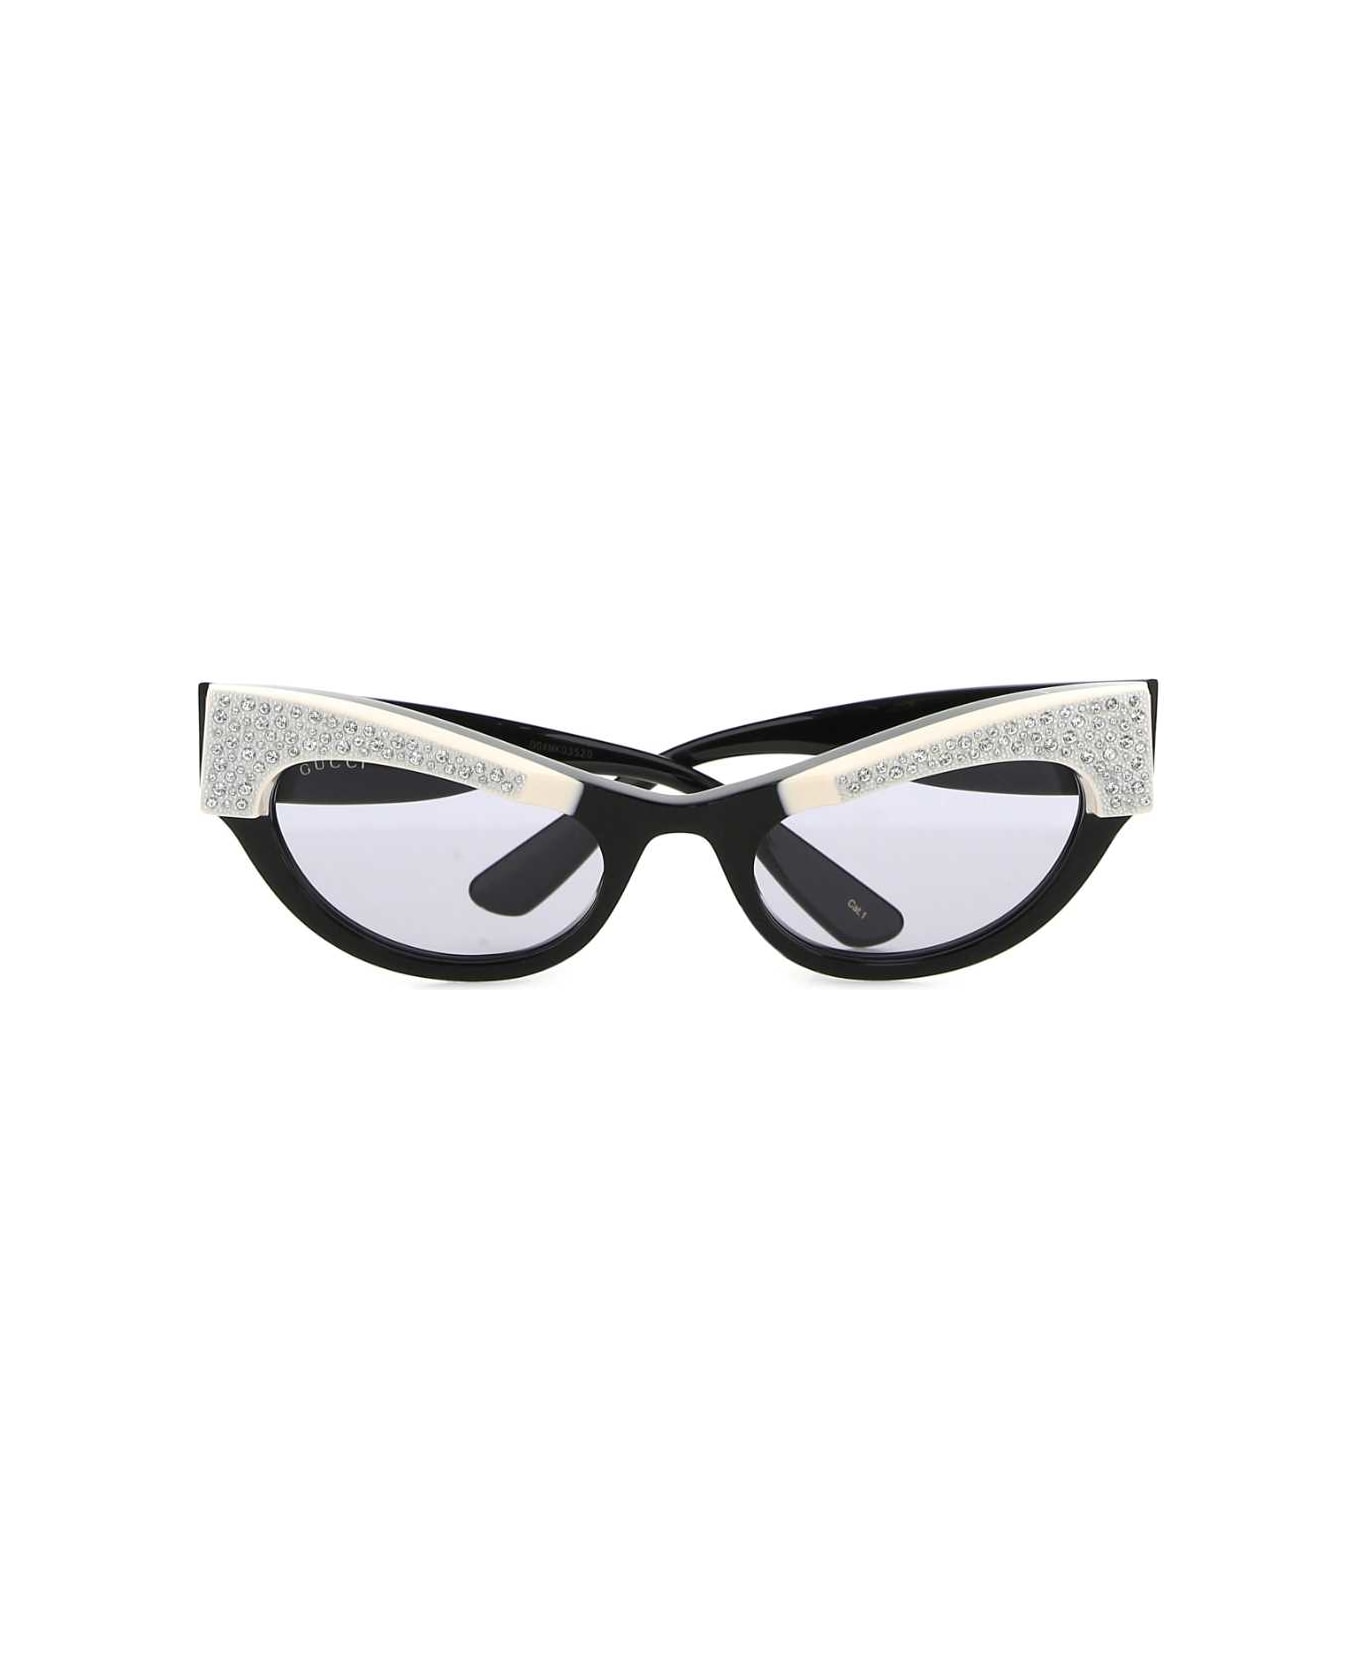 Gucci Black Acetate Sunglasses - 1053 サングラス